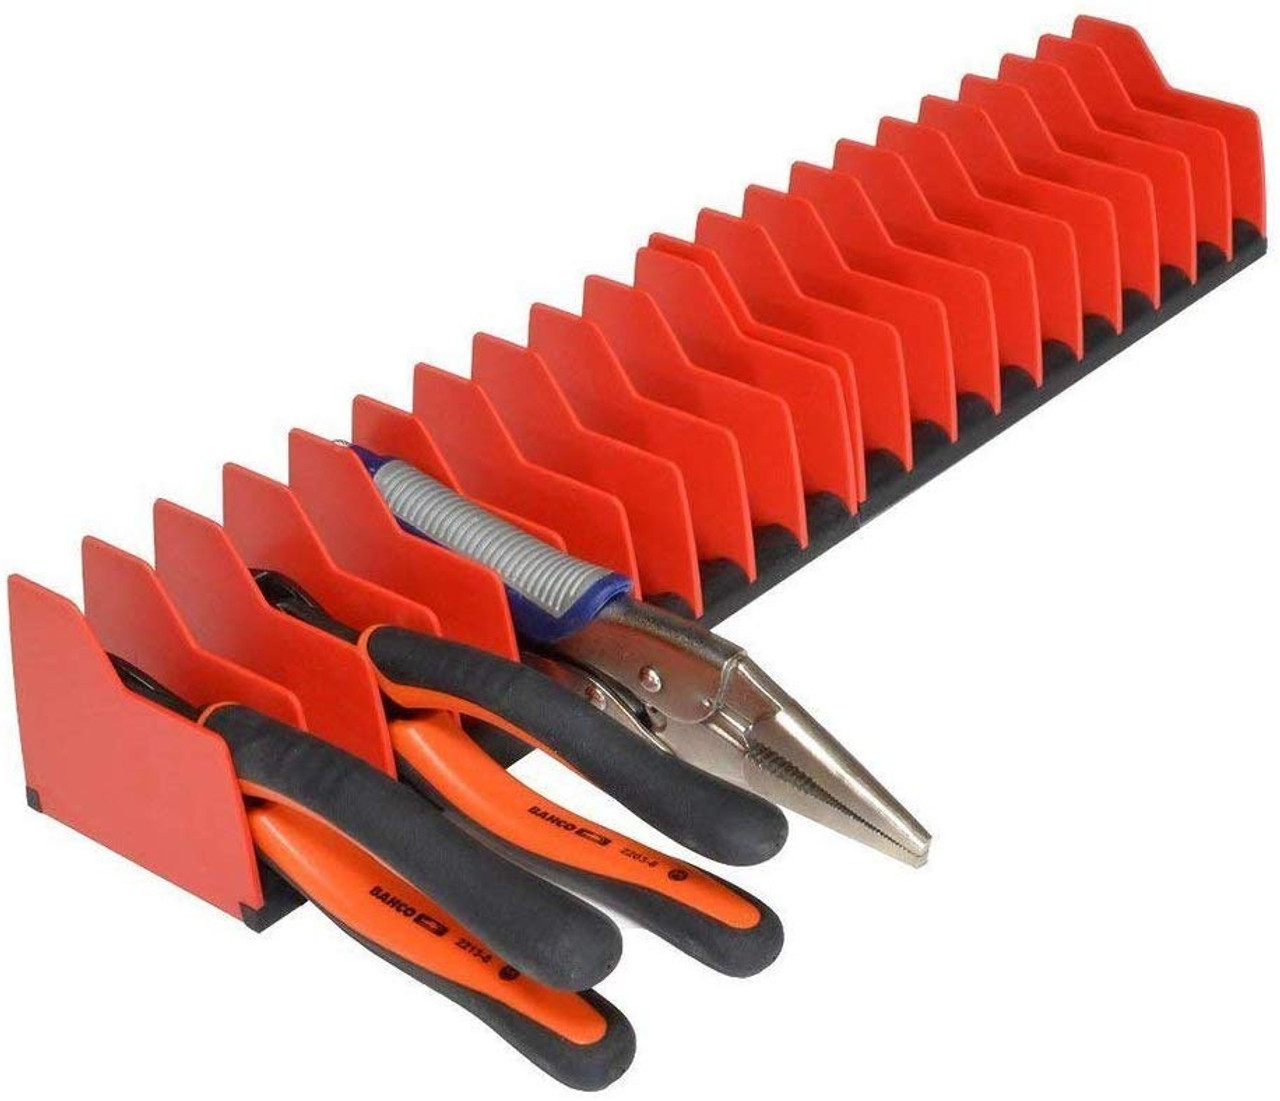 MLTOOLS Pliers Cutters Organizer Pro – 10 Tools Plier Organizer